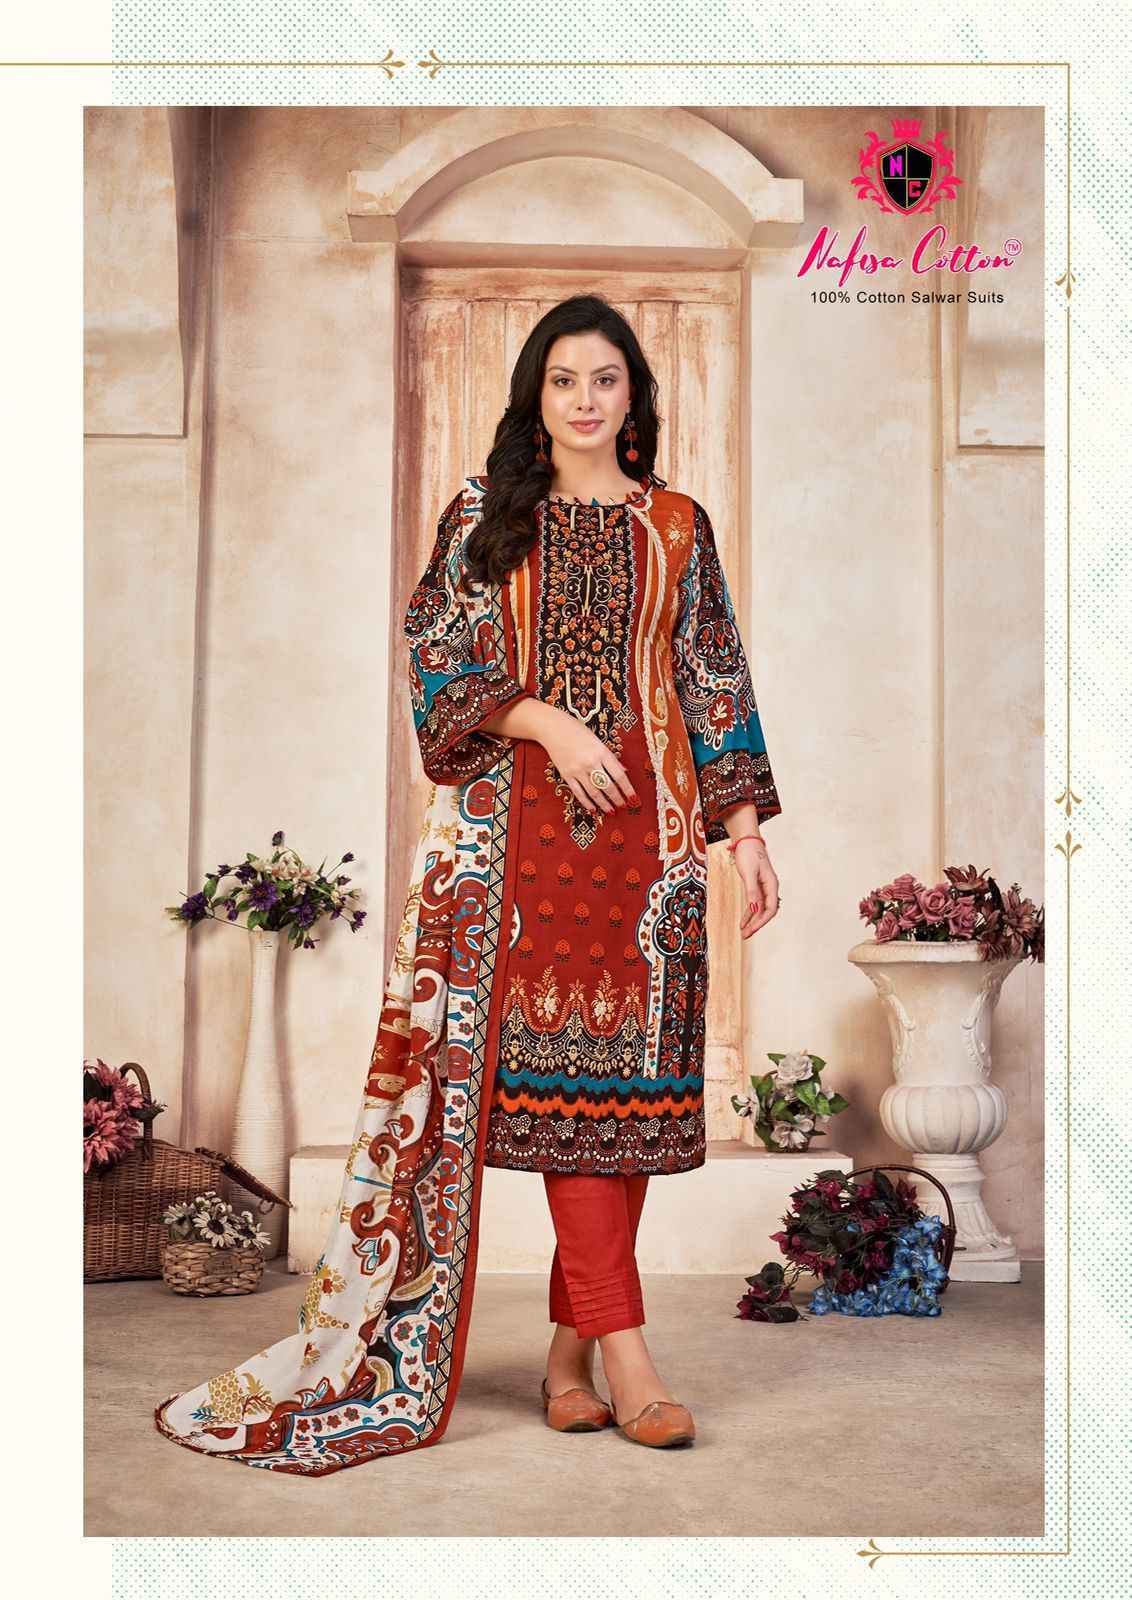 Share 197+ amritsar suits market super hot